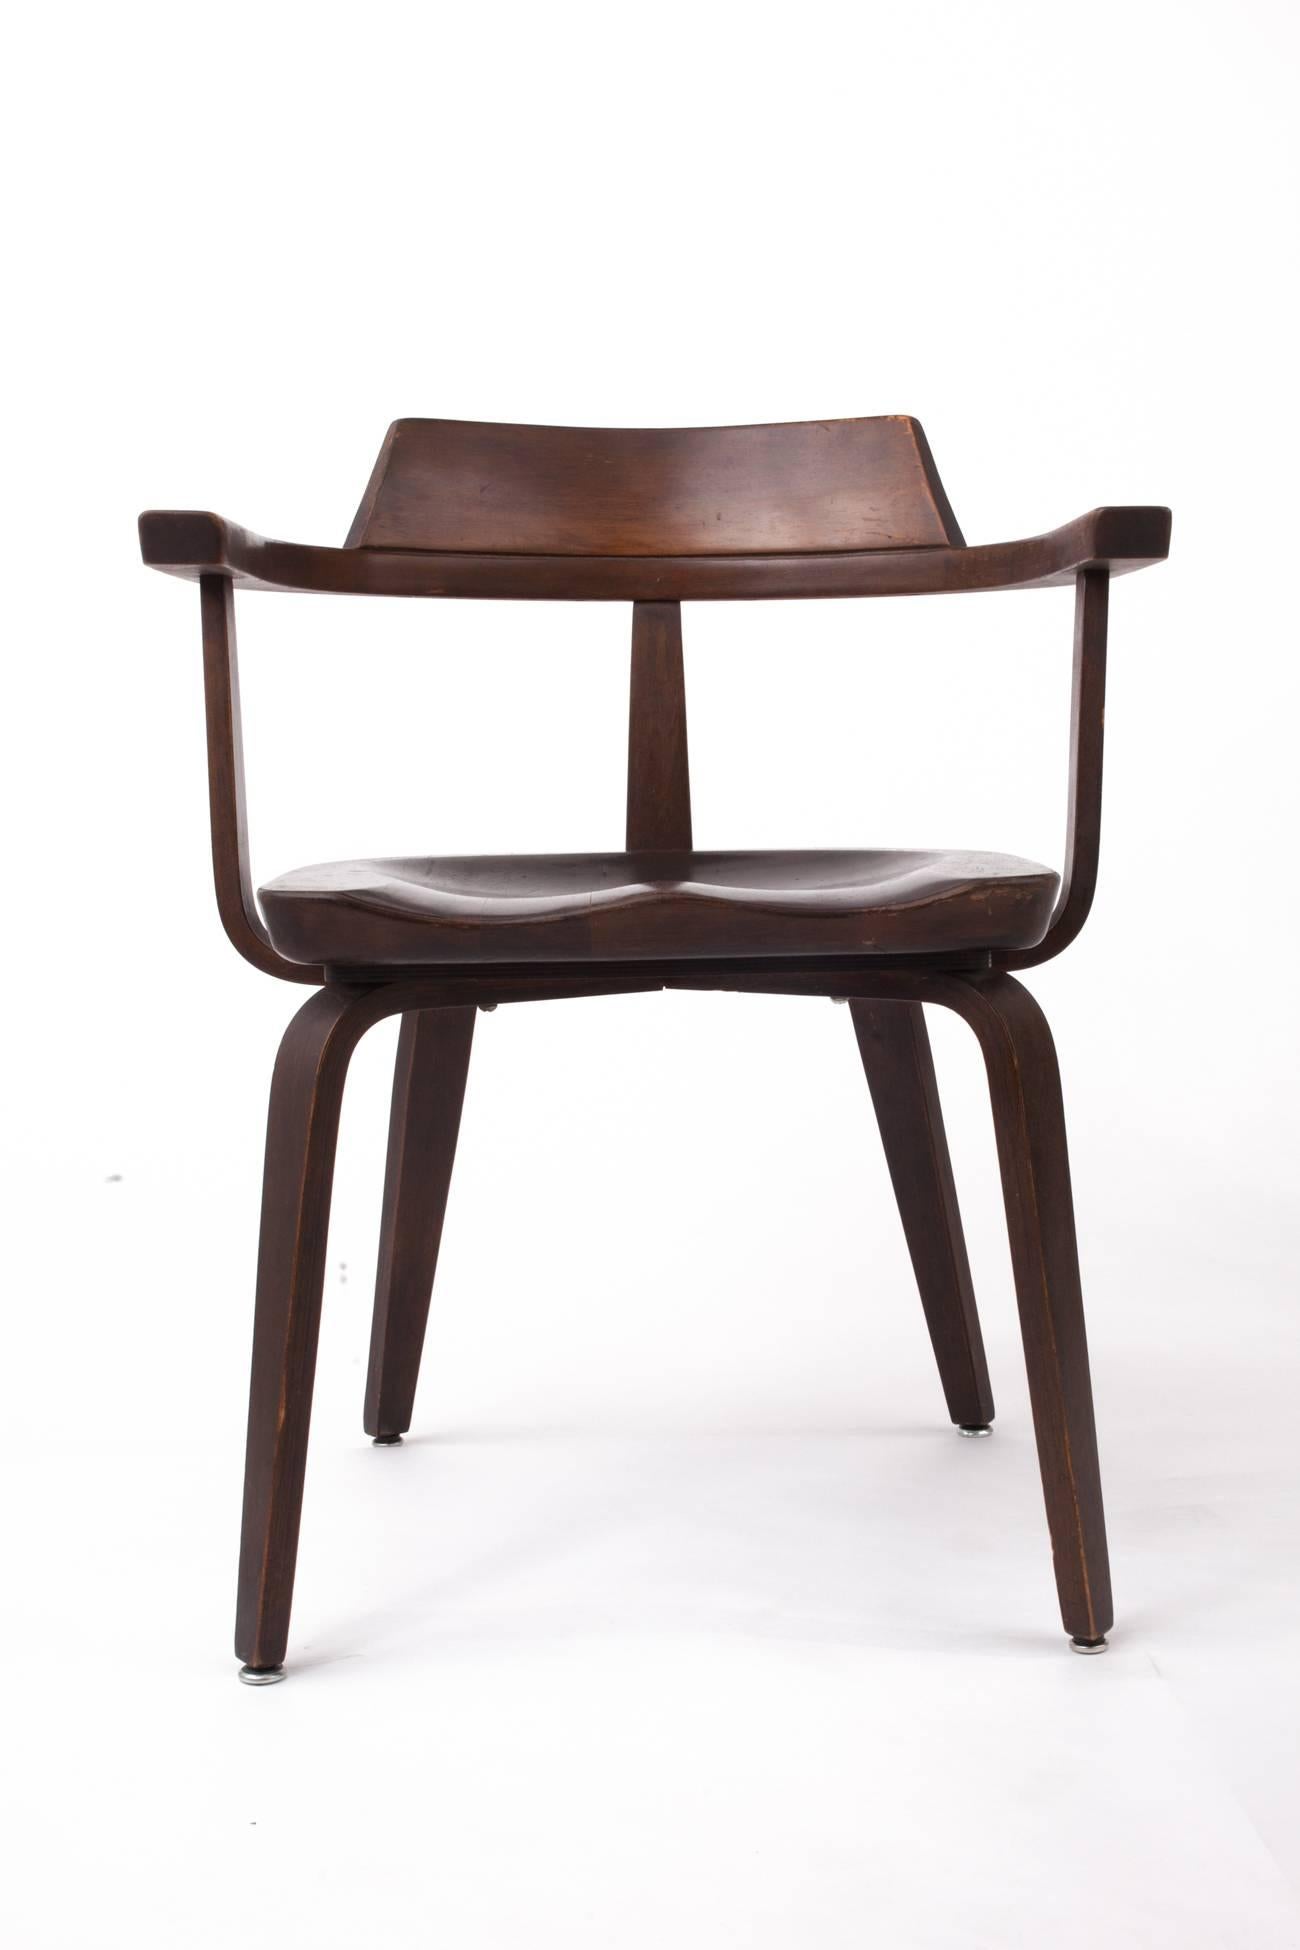 German Rare Pair of Bauhaus W199 Chairs by Walter Gropius